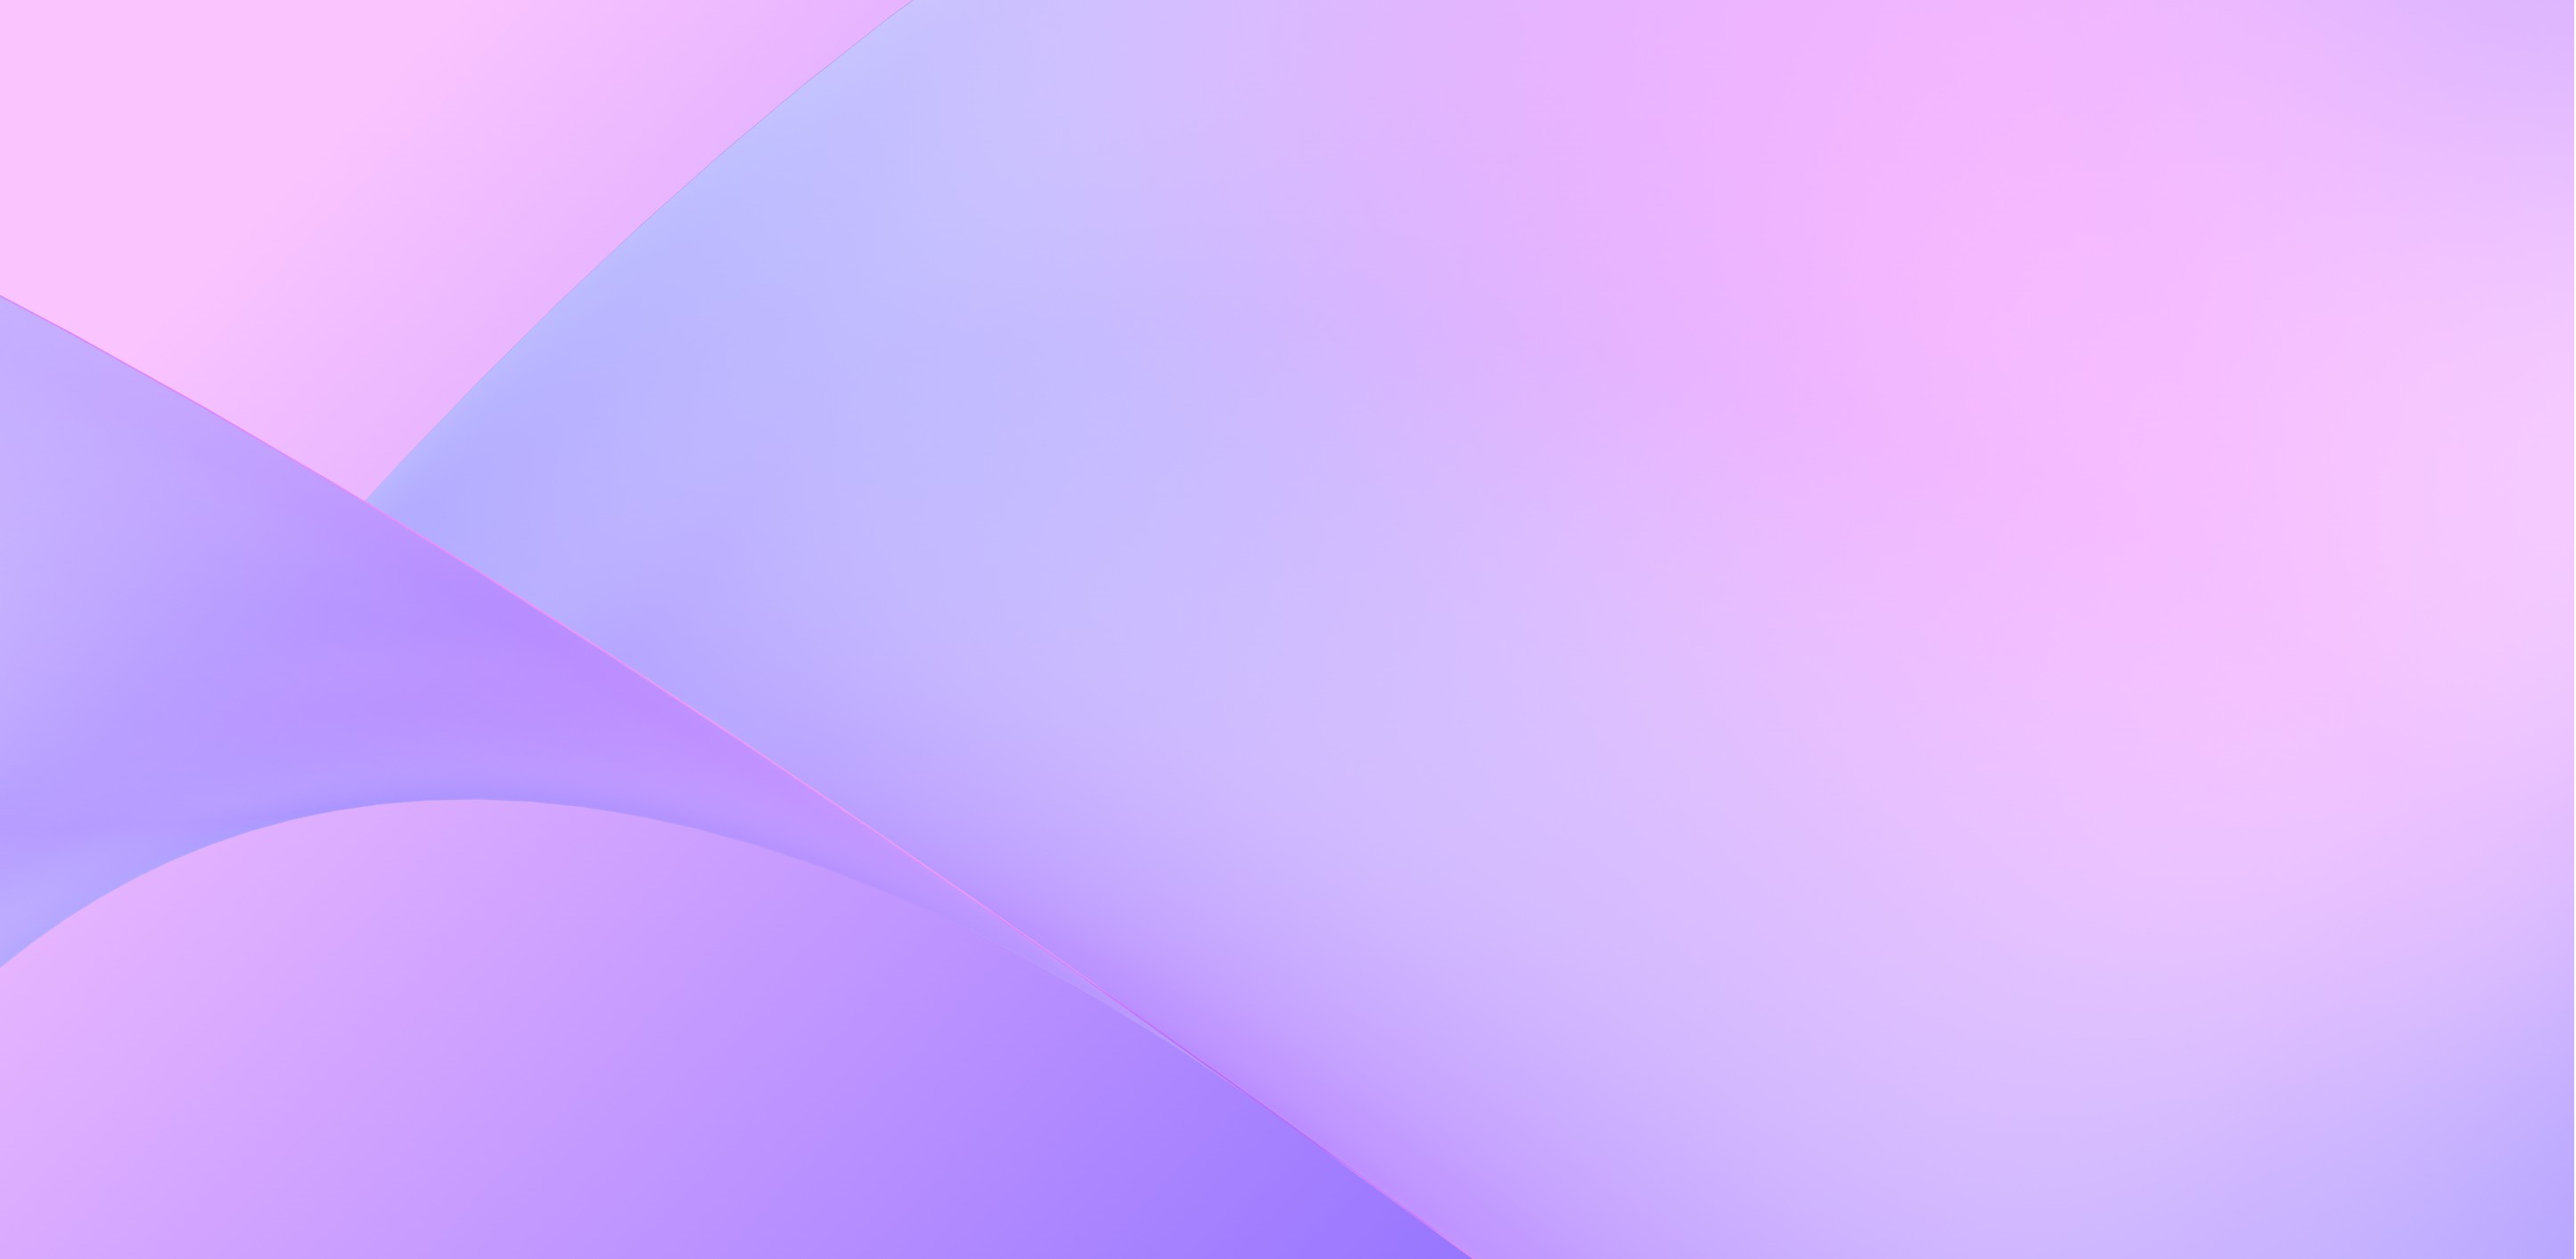 Pink geometric background image